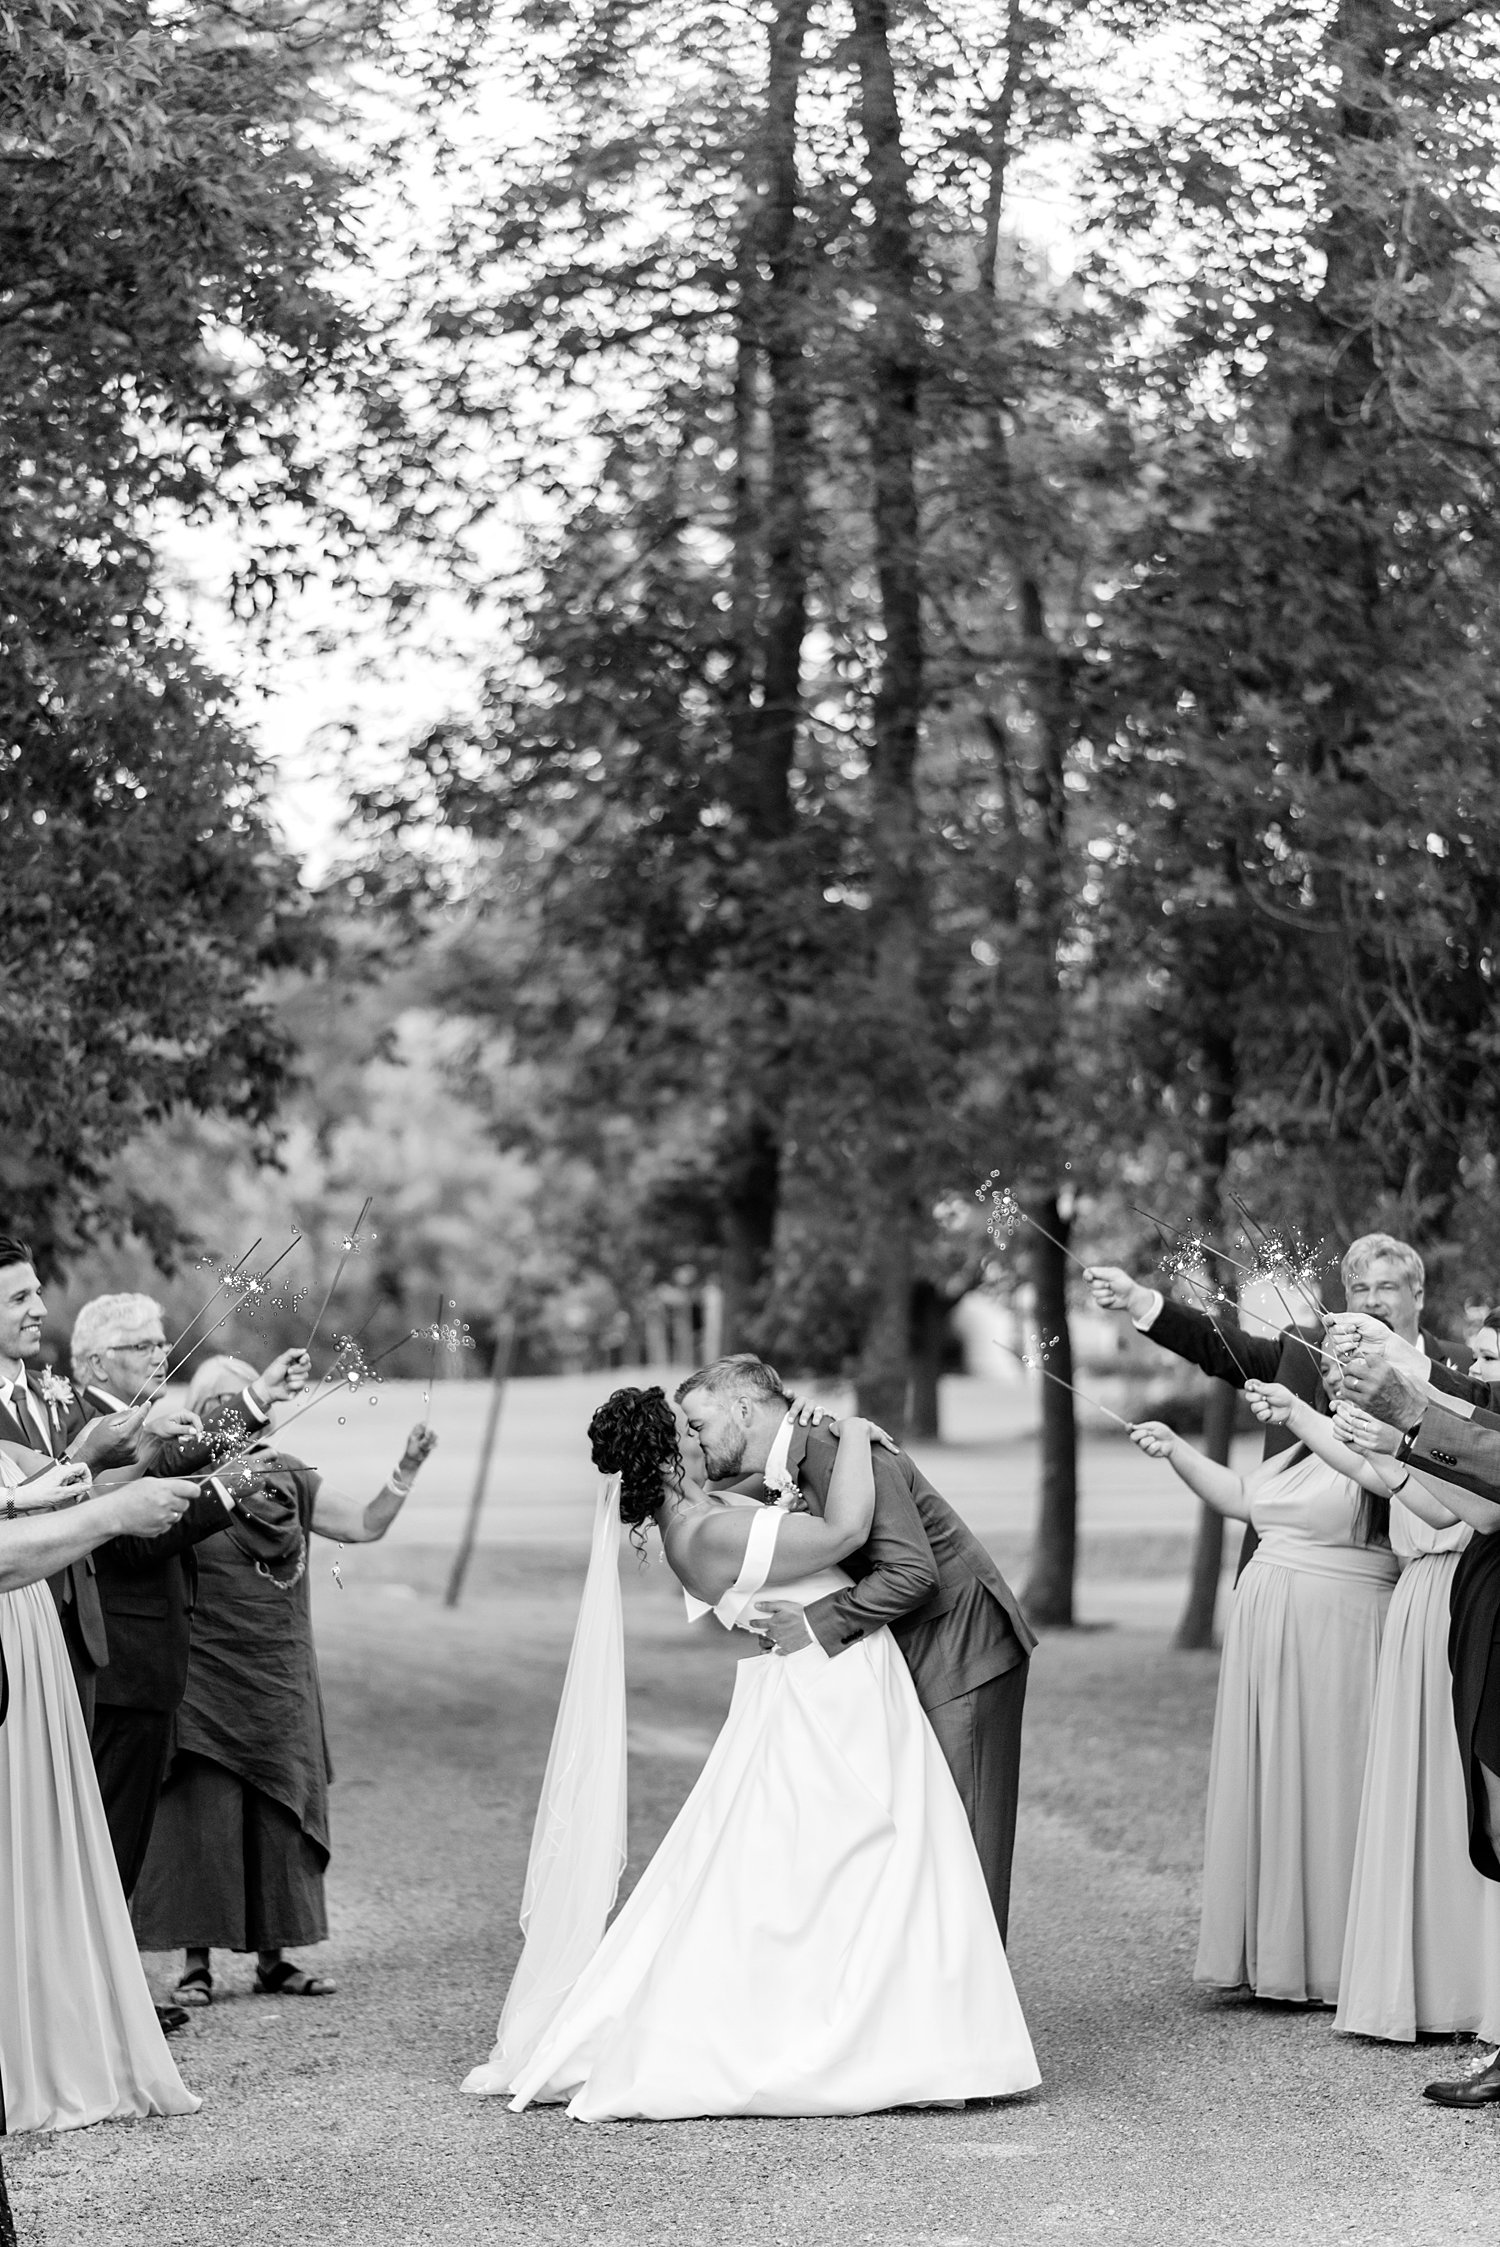 Elegant Summer Backyard Tented Wedding in Sydenham, Ontario | Prince Edward County Wedding Photographer | Holly McMurter Photographs_0090.jpg